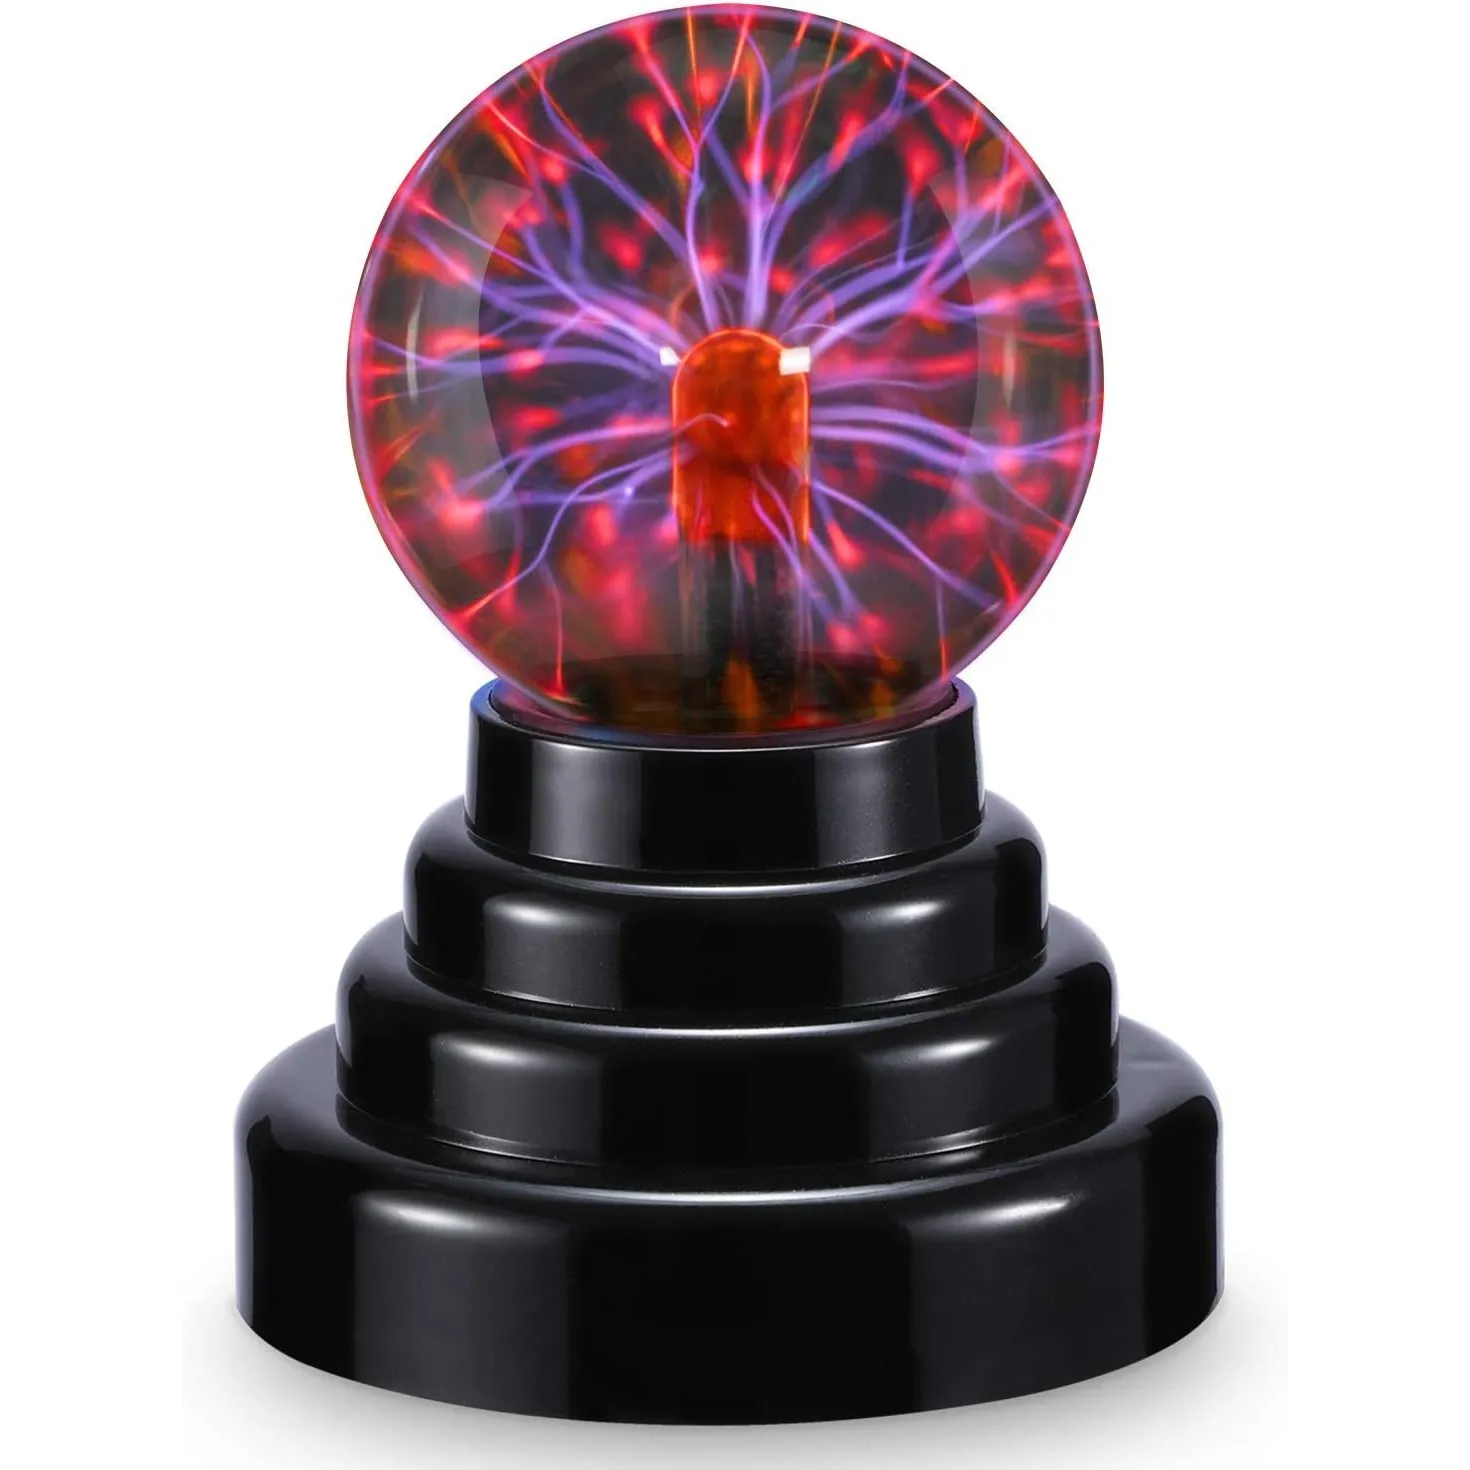 3 Inch Plasma Ball Lamp Touch Sensitive Globe USB Battery Powered Nebula Thunder Lightning Novelty Toy Kids Prop Decoration Gift